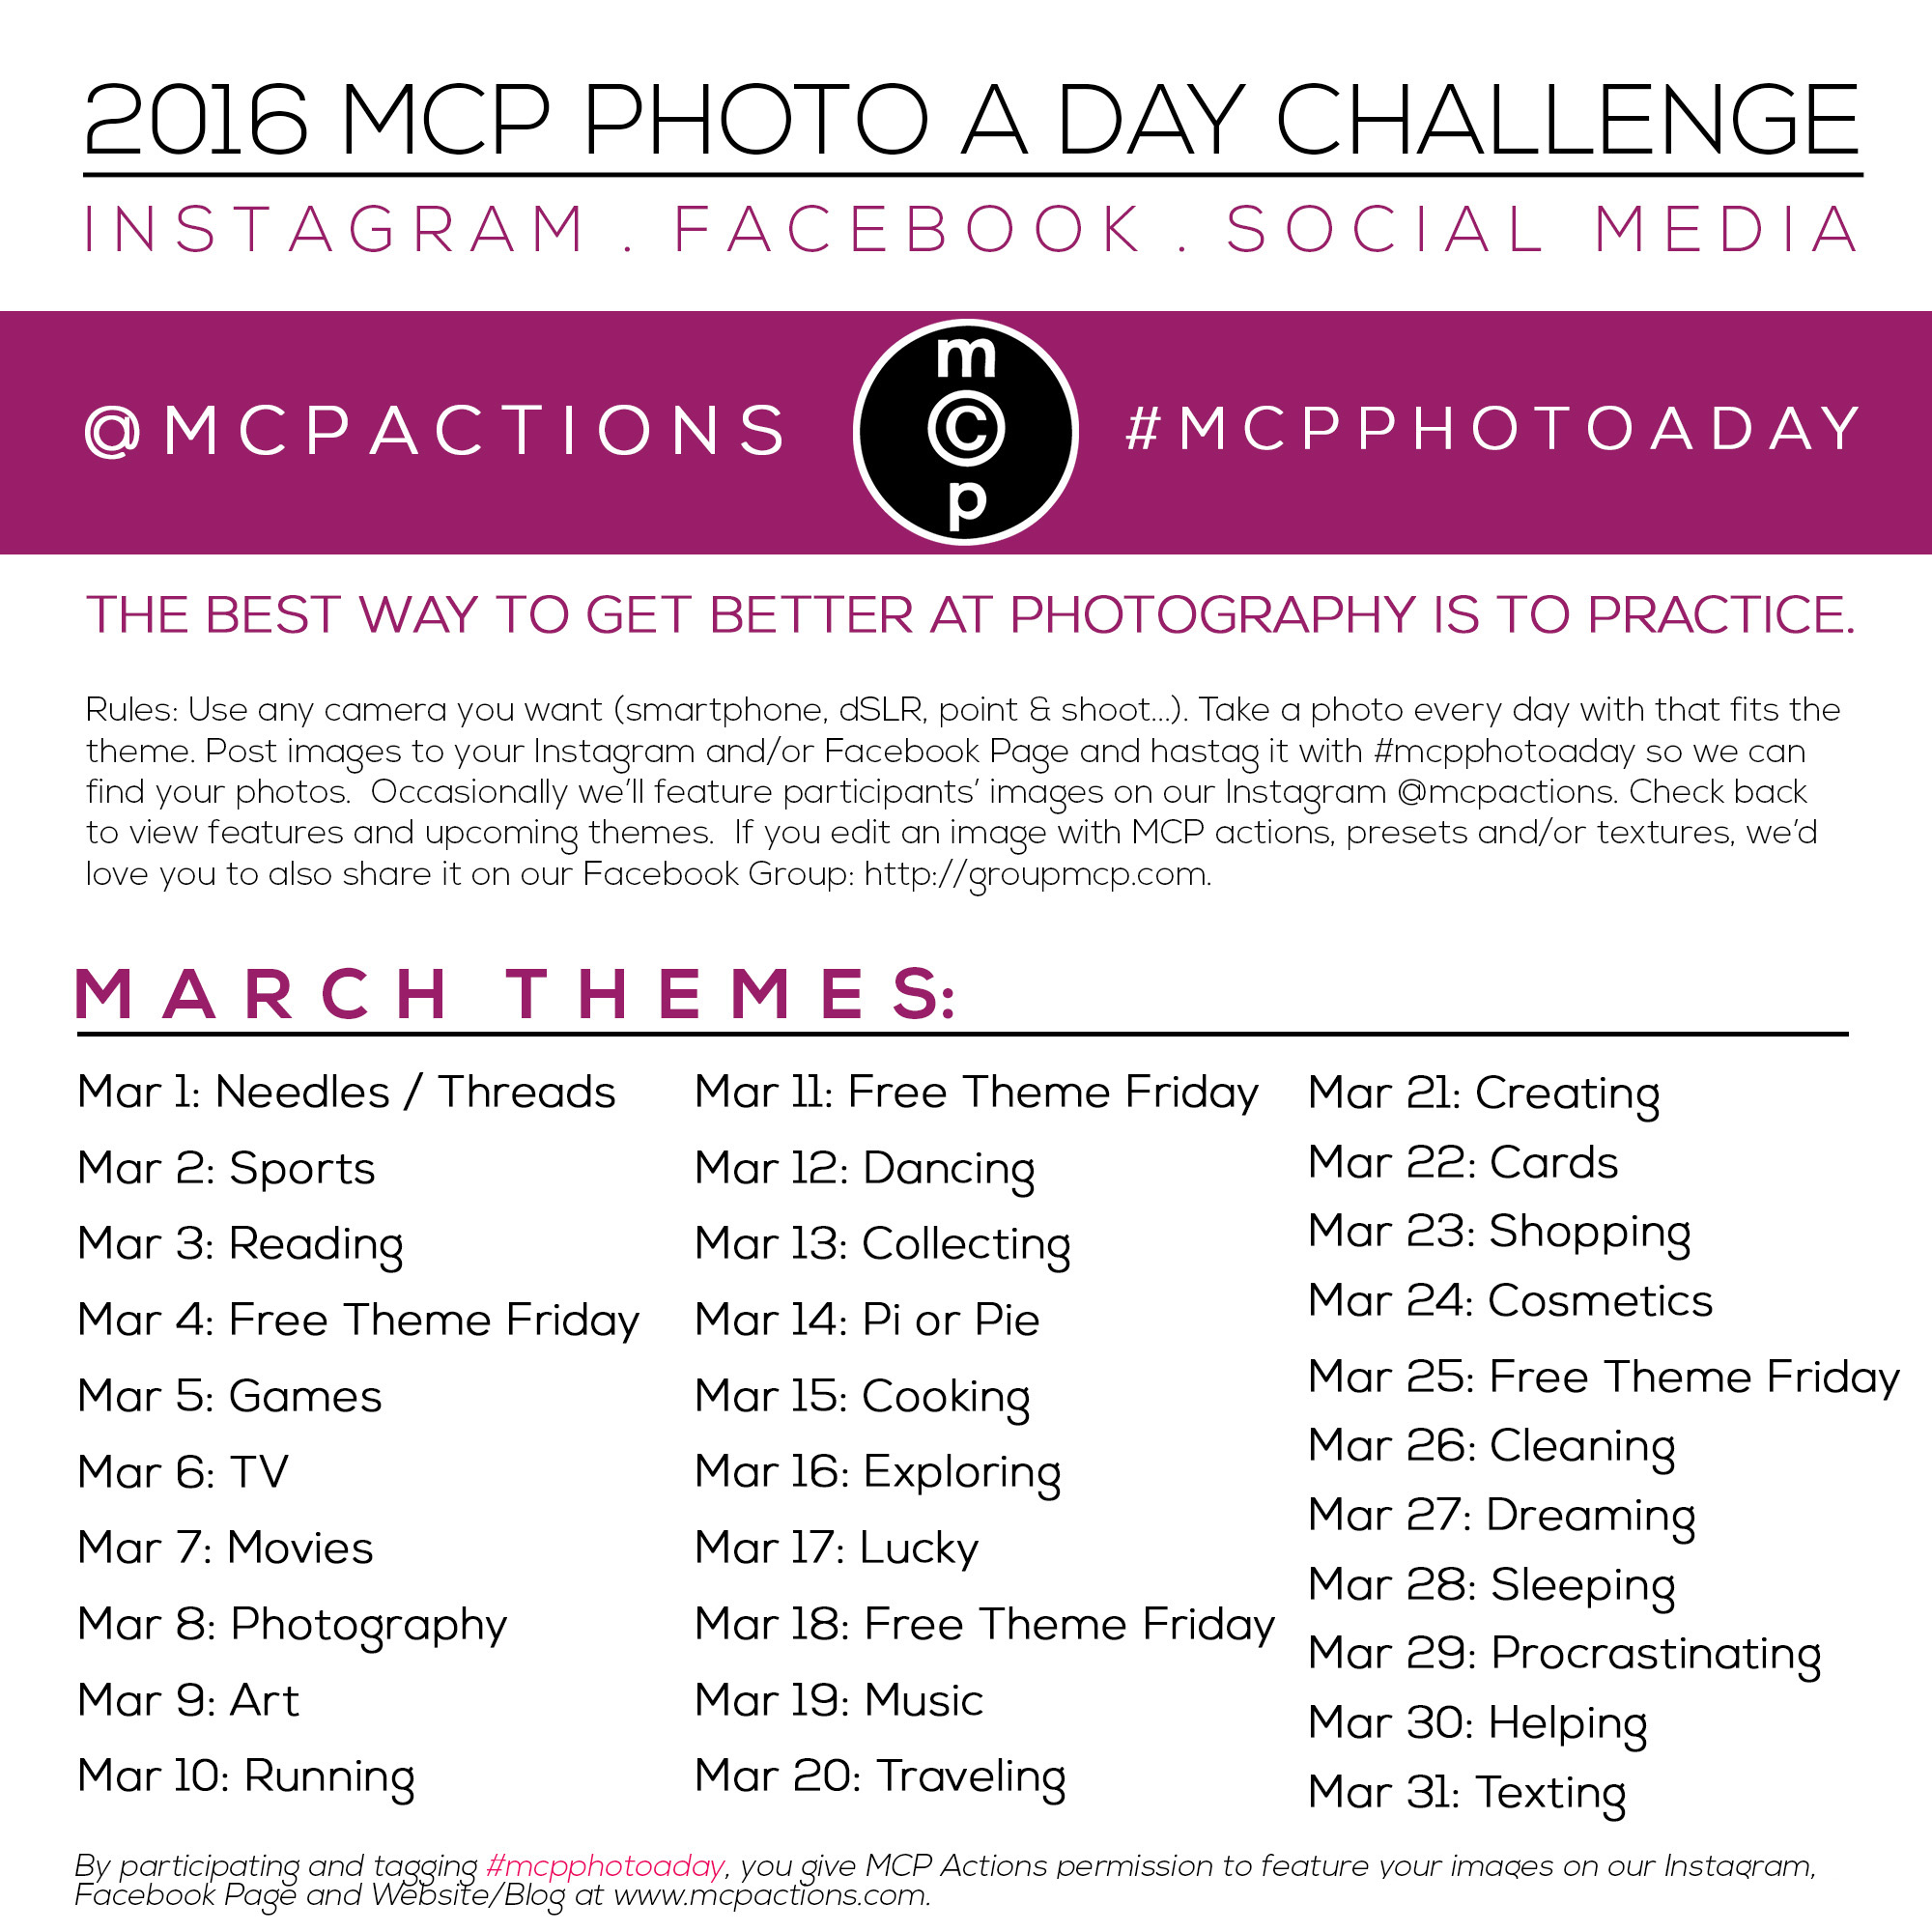 mcpphotoaday-march-2016 MCP ഫോട്ടോ എ ഡേ ചലഞ്ച്: മാർച്ച് 2016 ആക്റ്റിവിറ്റീസ് അസൈൻമെന്റുകൾ MCP പ്രവർത്തന പദ്ധതികൾ